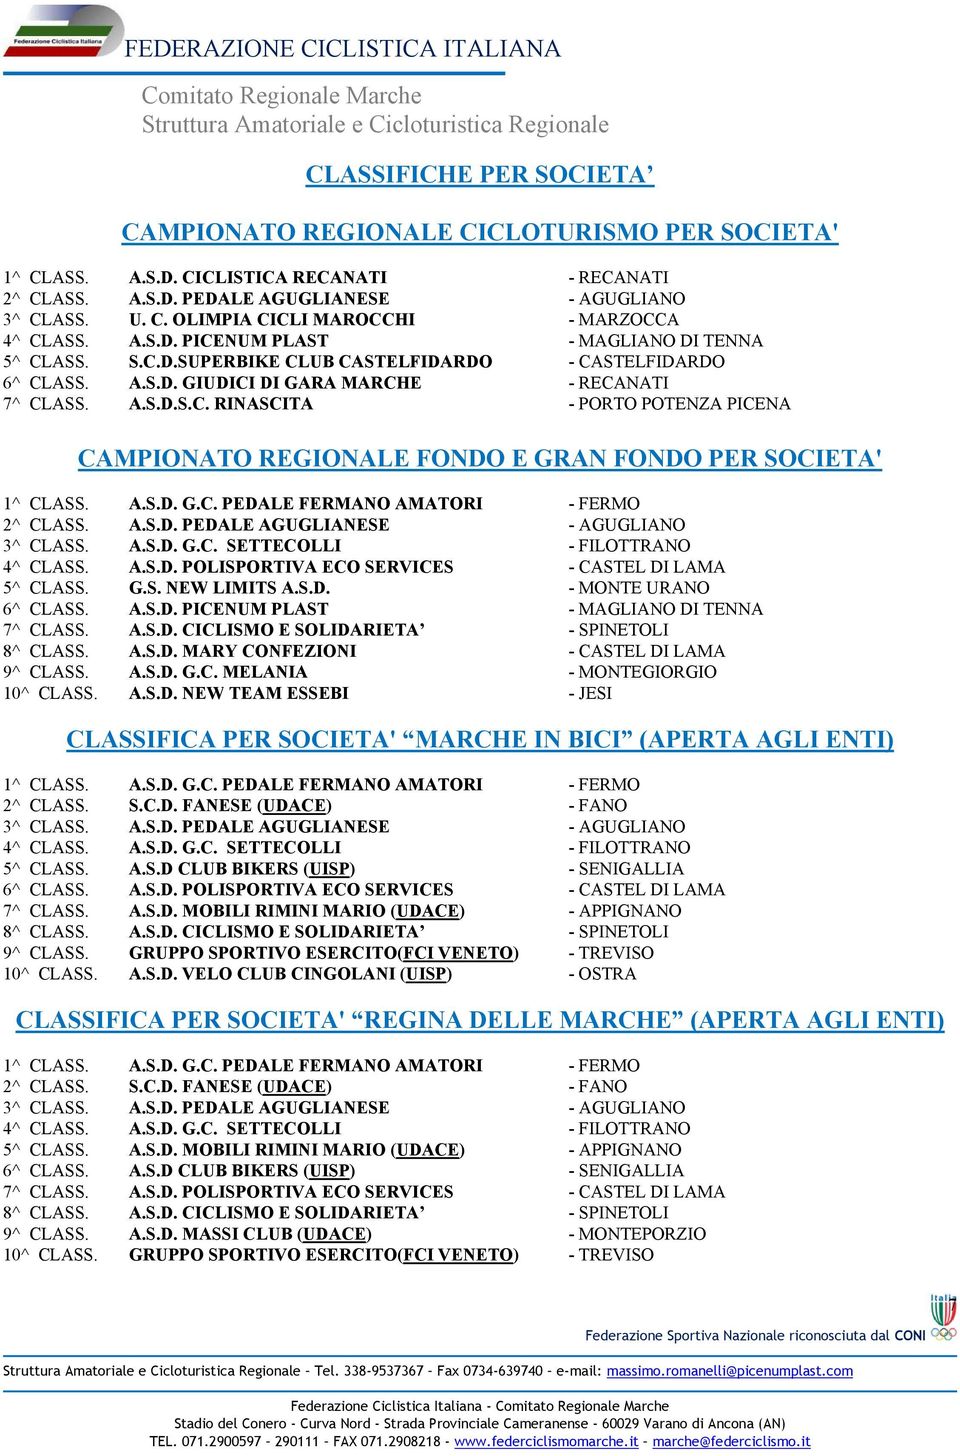 A.S.D. G.C. PEDALE FERMANO AMATORI 2^ CLASS. A.S.D. PEDALE AGUGLIANESE - AGUGLIANO 3^ CLASS. A.S.D. G.C. SETTECOLLI - FILOTTRANO 4^ CLASS. A.S.D. POLISPORTIVA ECO SERVICES - CASTEL DI LAMA 5^ CLASS.